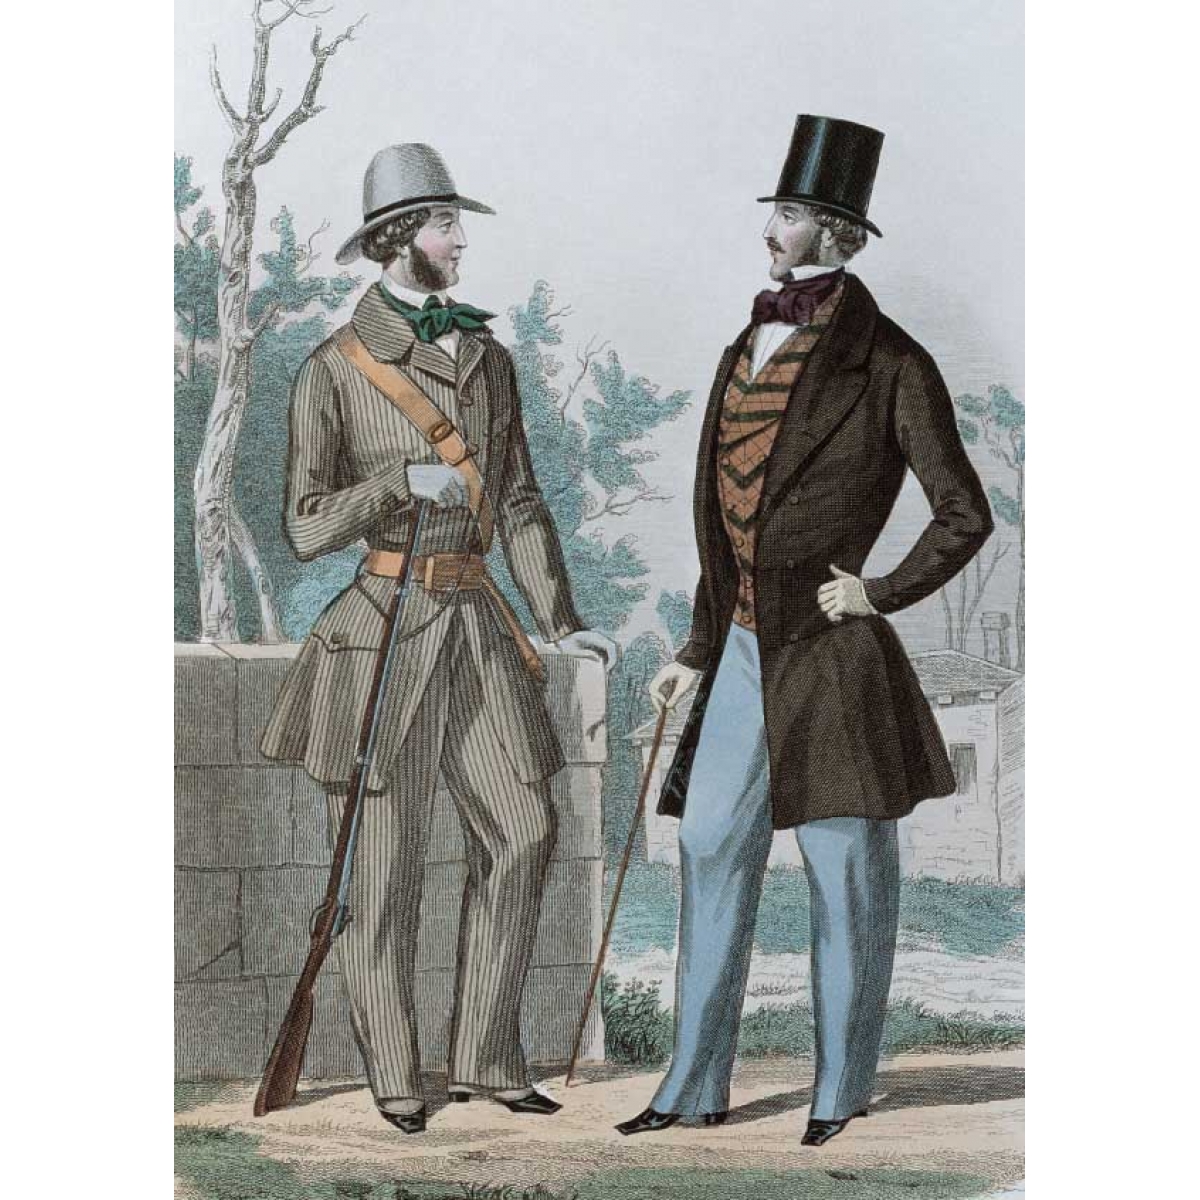 Мужской костюм позитивизм 19 век